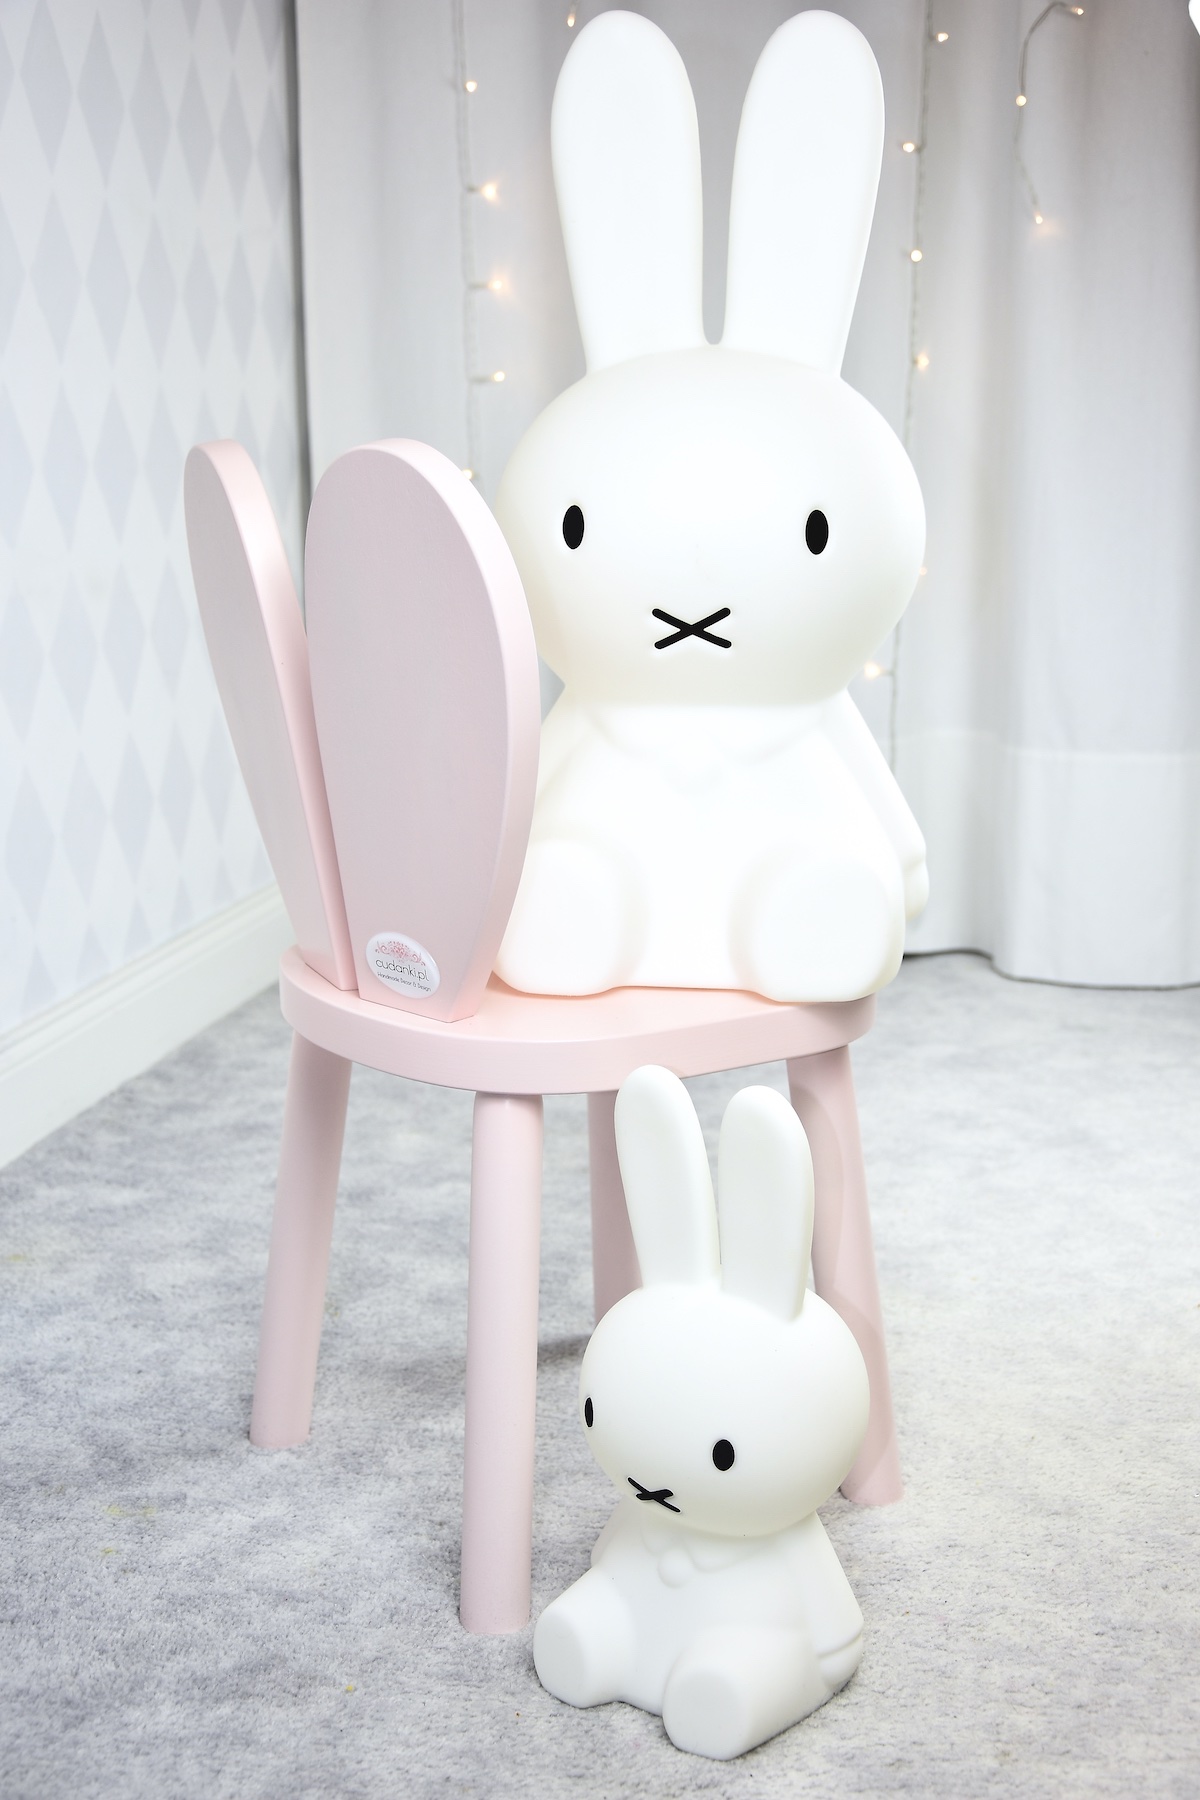 krzesło krzesełko królik rabiit chair heart serce